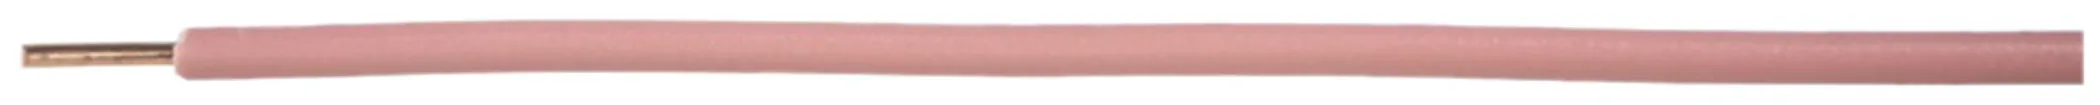 N-Draht H07Z1-U halogenfrei 1.5mm² 450/750V rosa Cca 